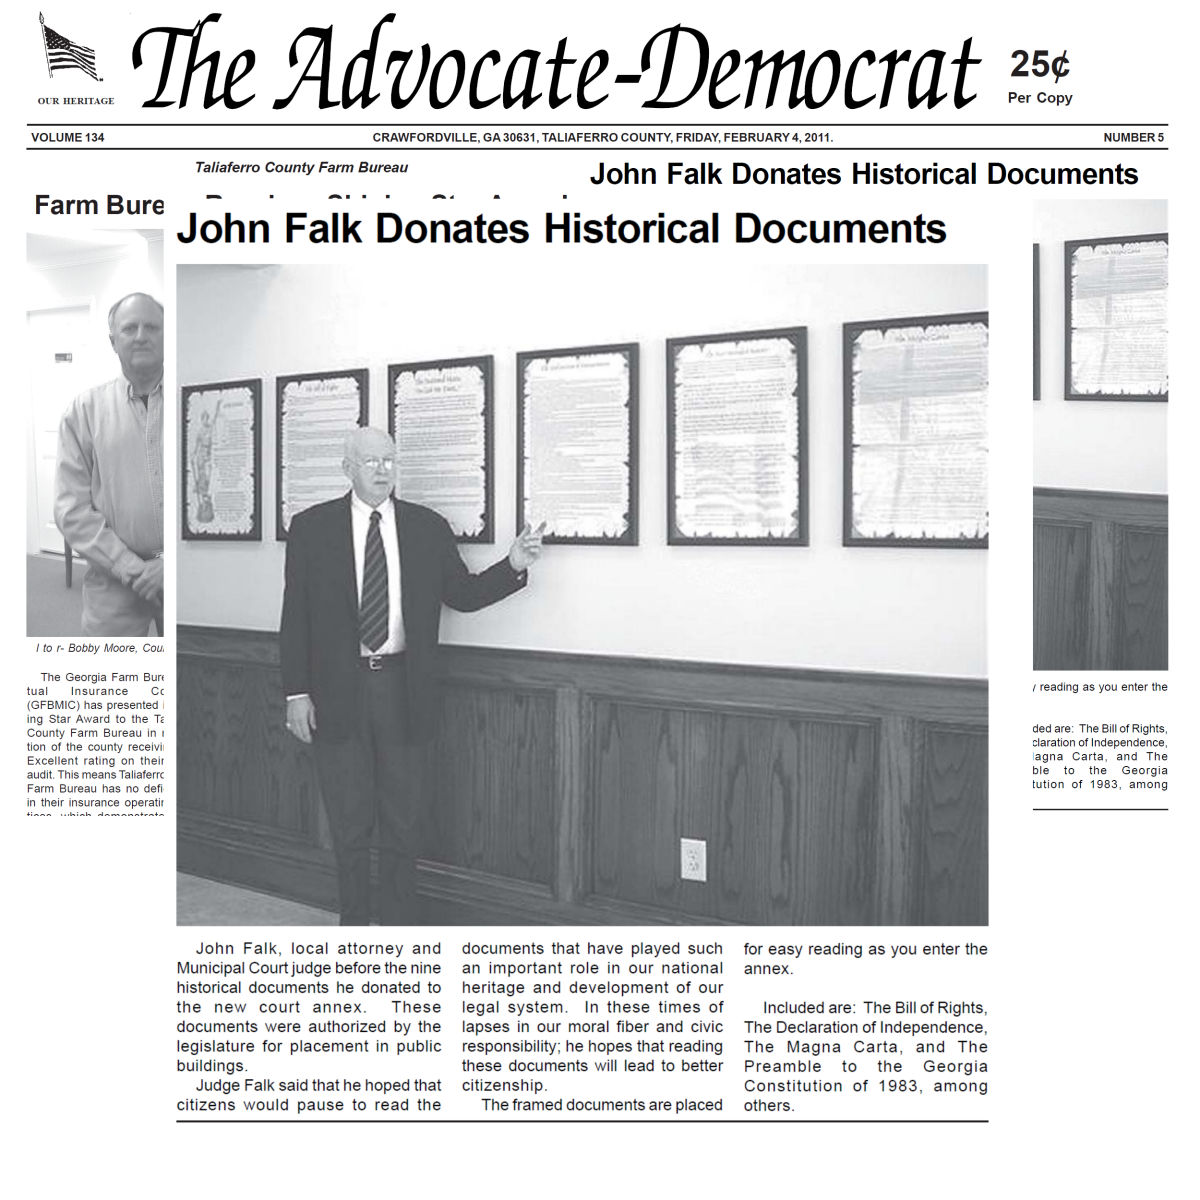 The Advocate-Democrat News Story